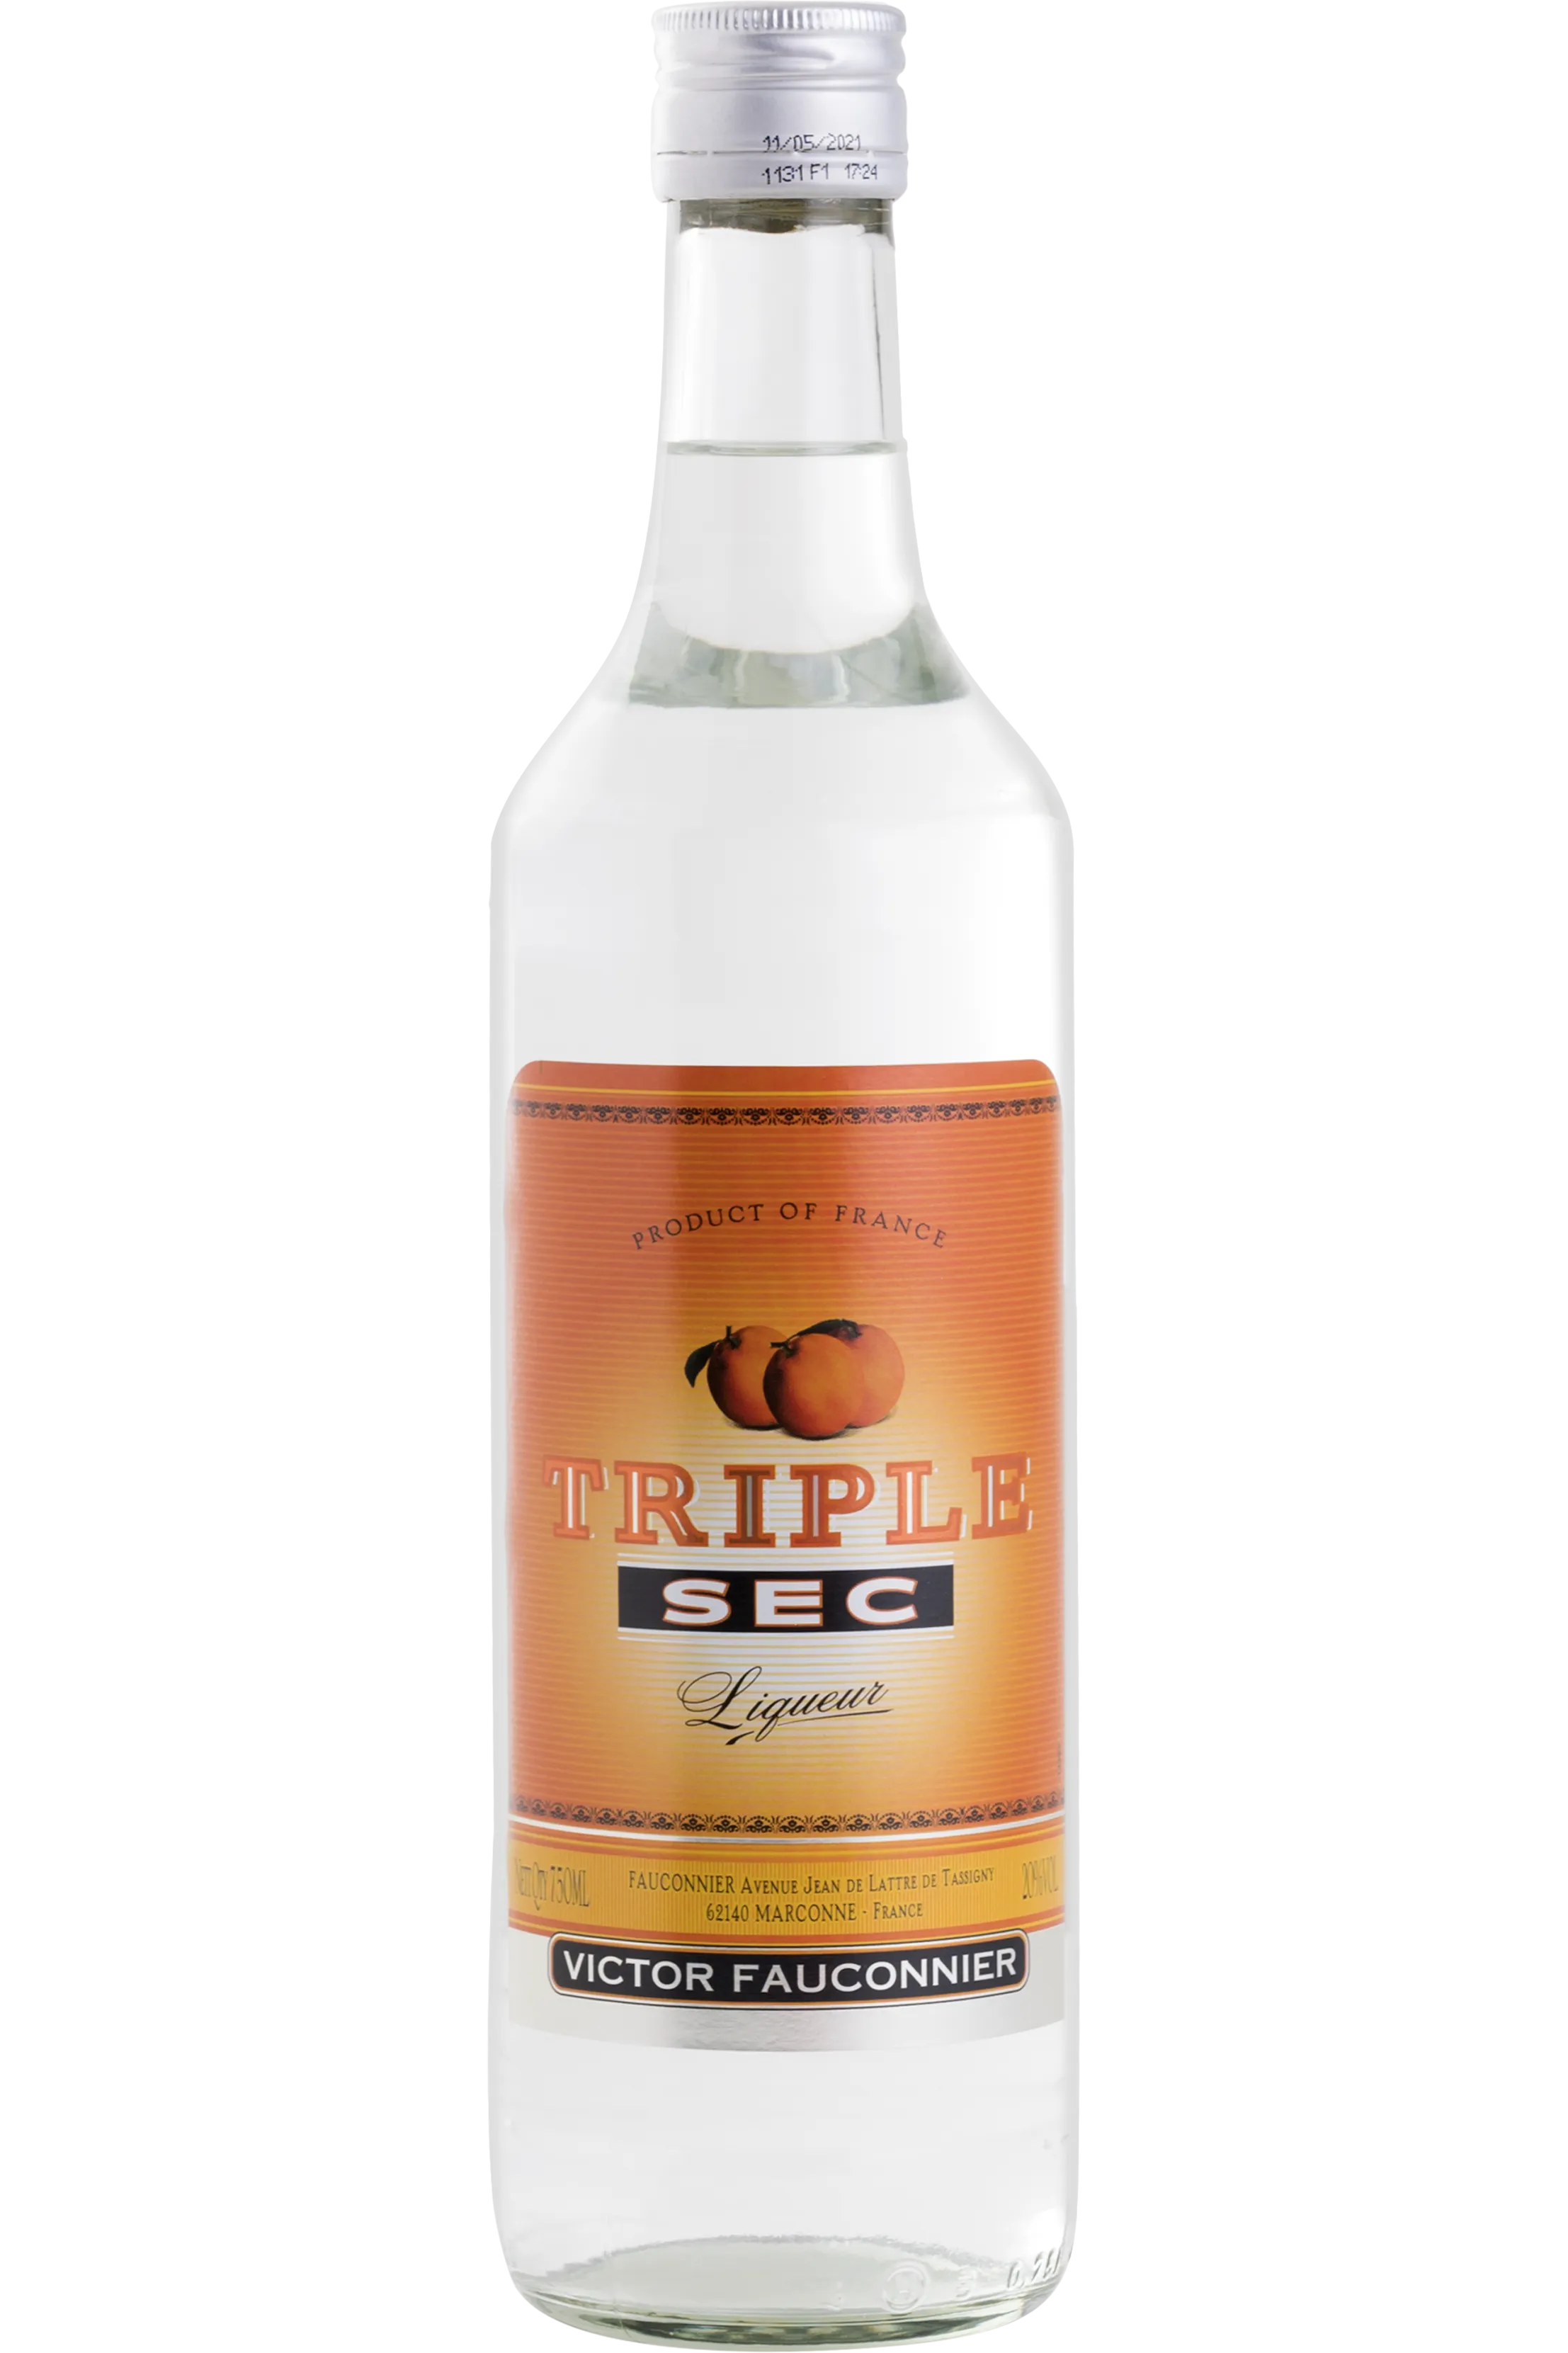 Buy Triple Sec Liqueur Available in 750 ml